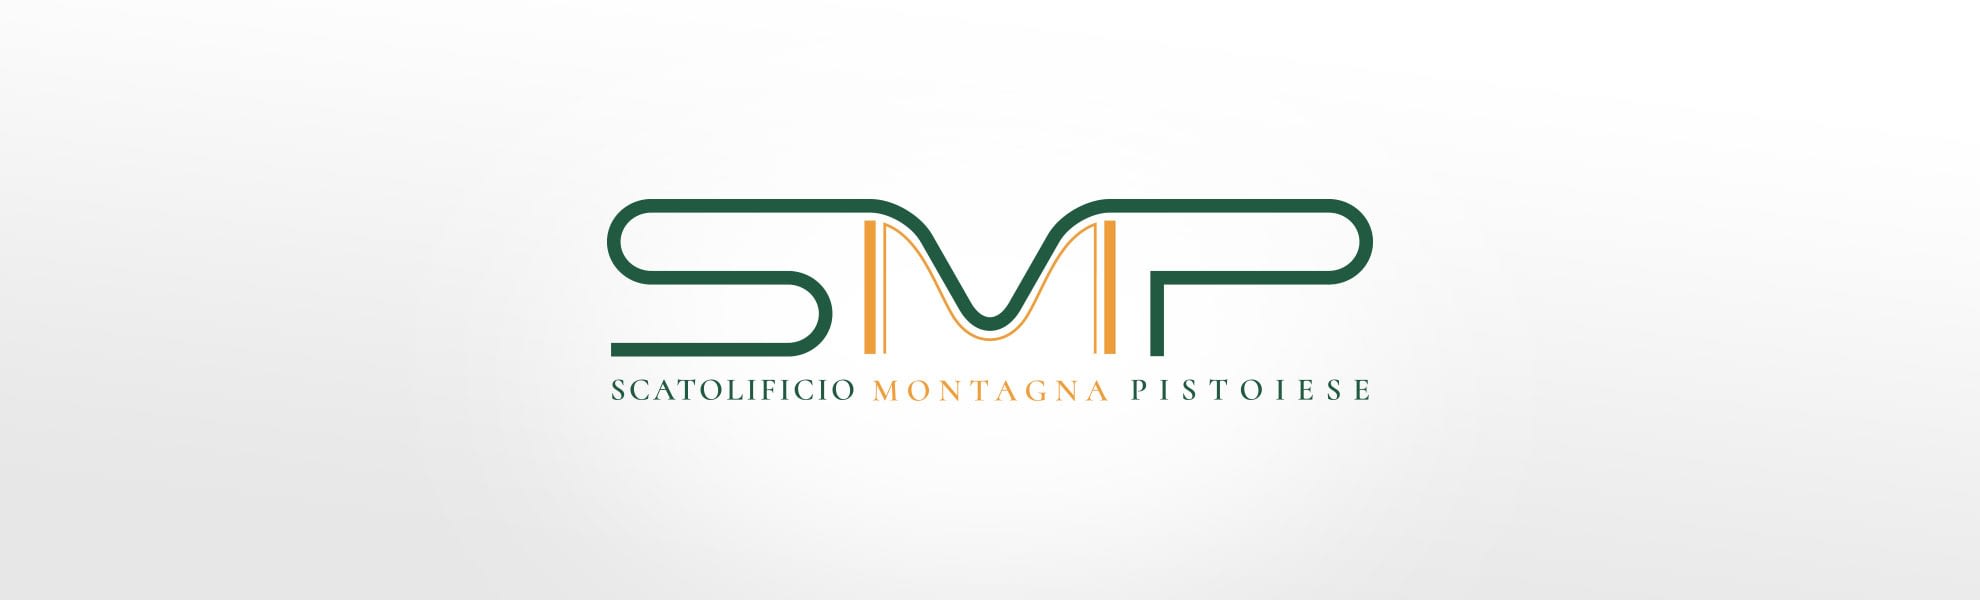 Scatolificio Montagna Pistoiese Logo Design